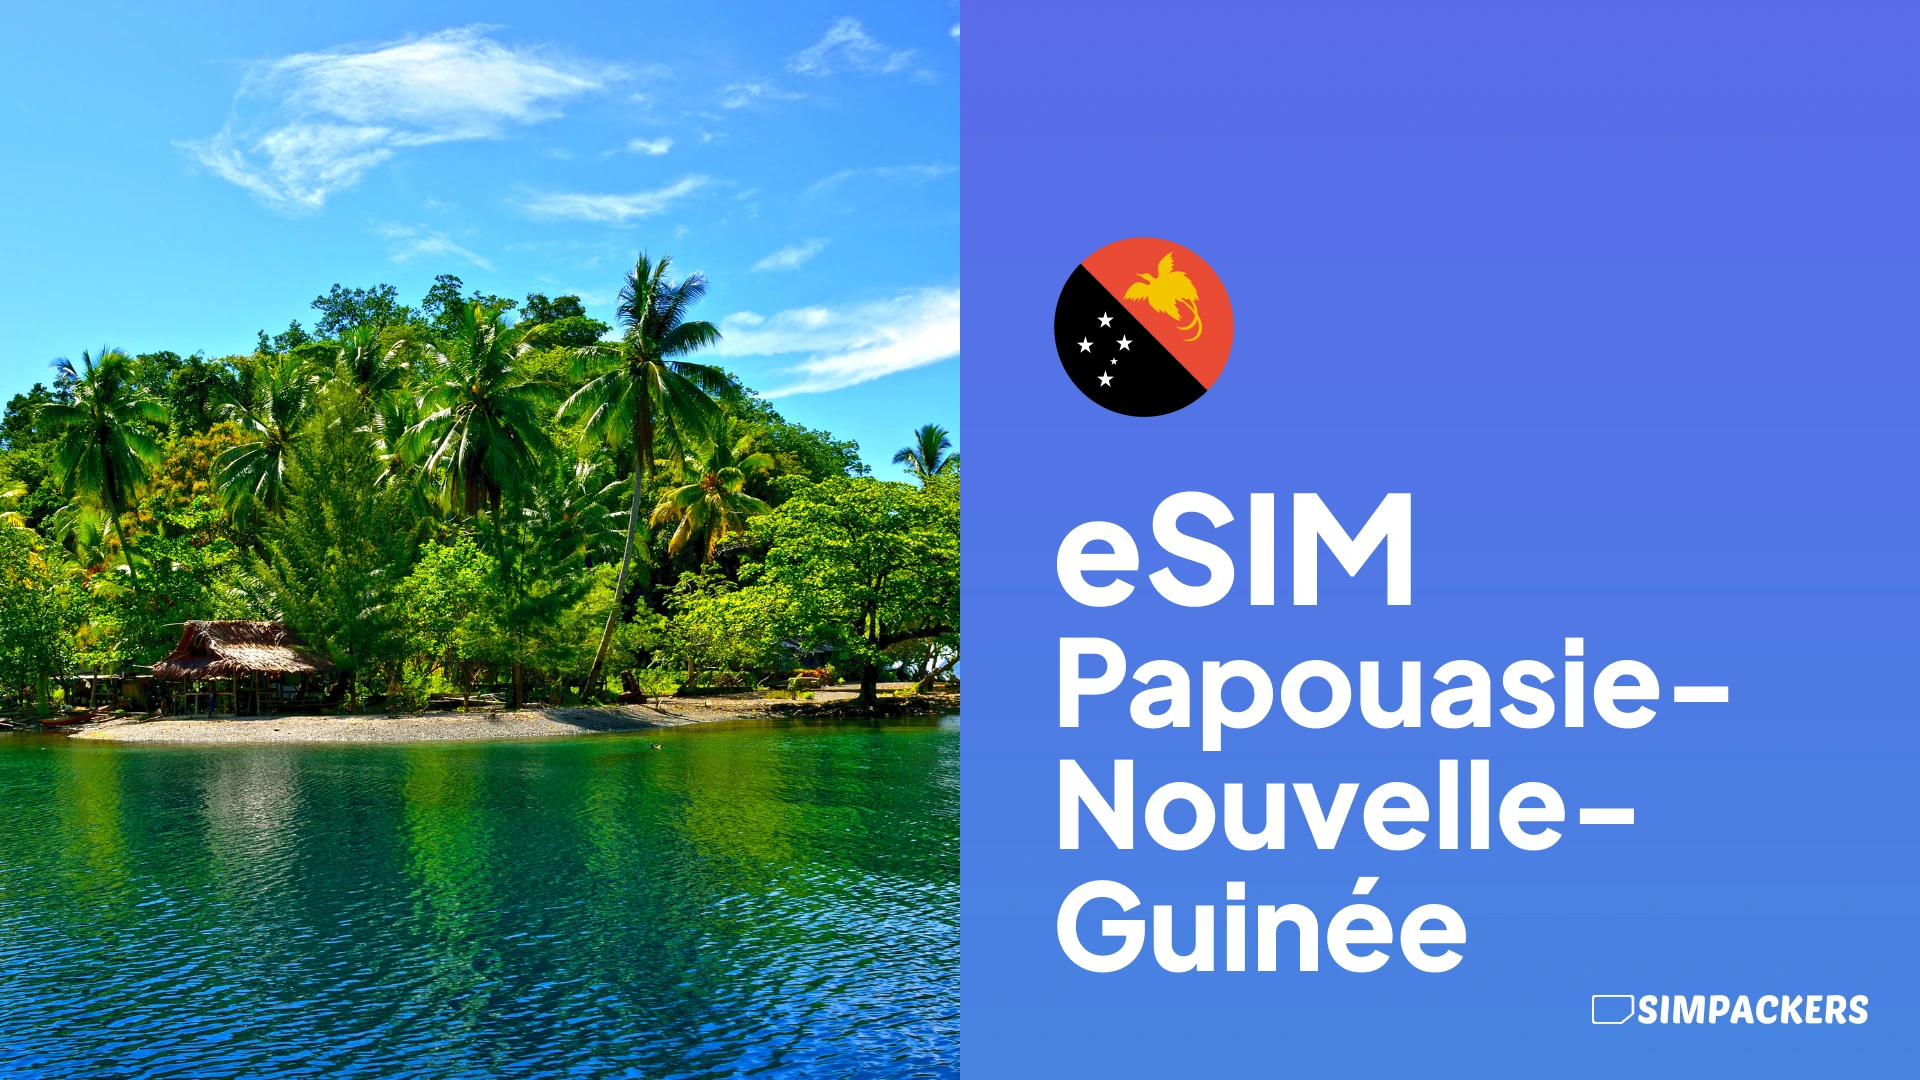 FR/FEATURED_IMAGES/esim-papouasie-nouvelle-guinee.webp